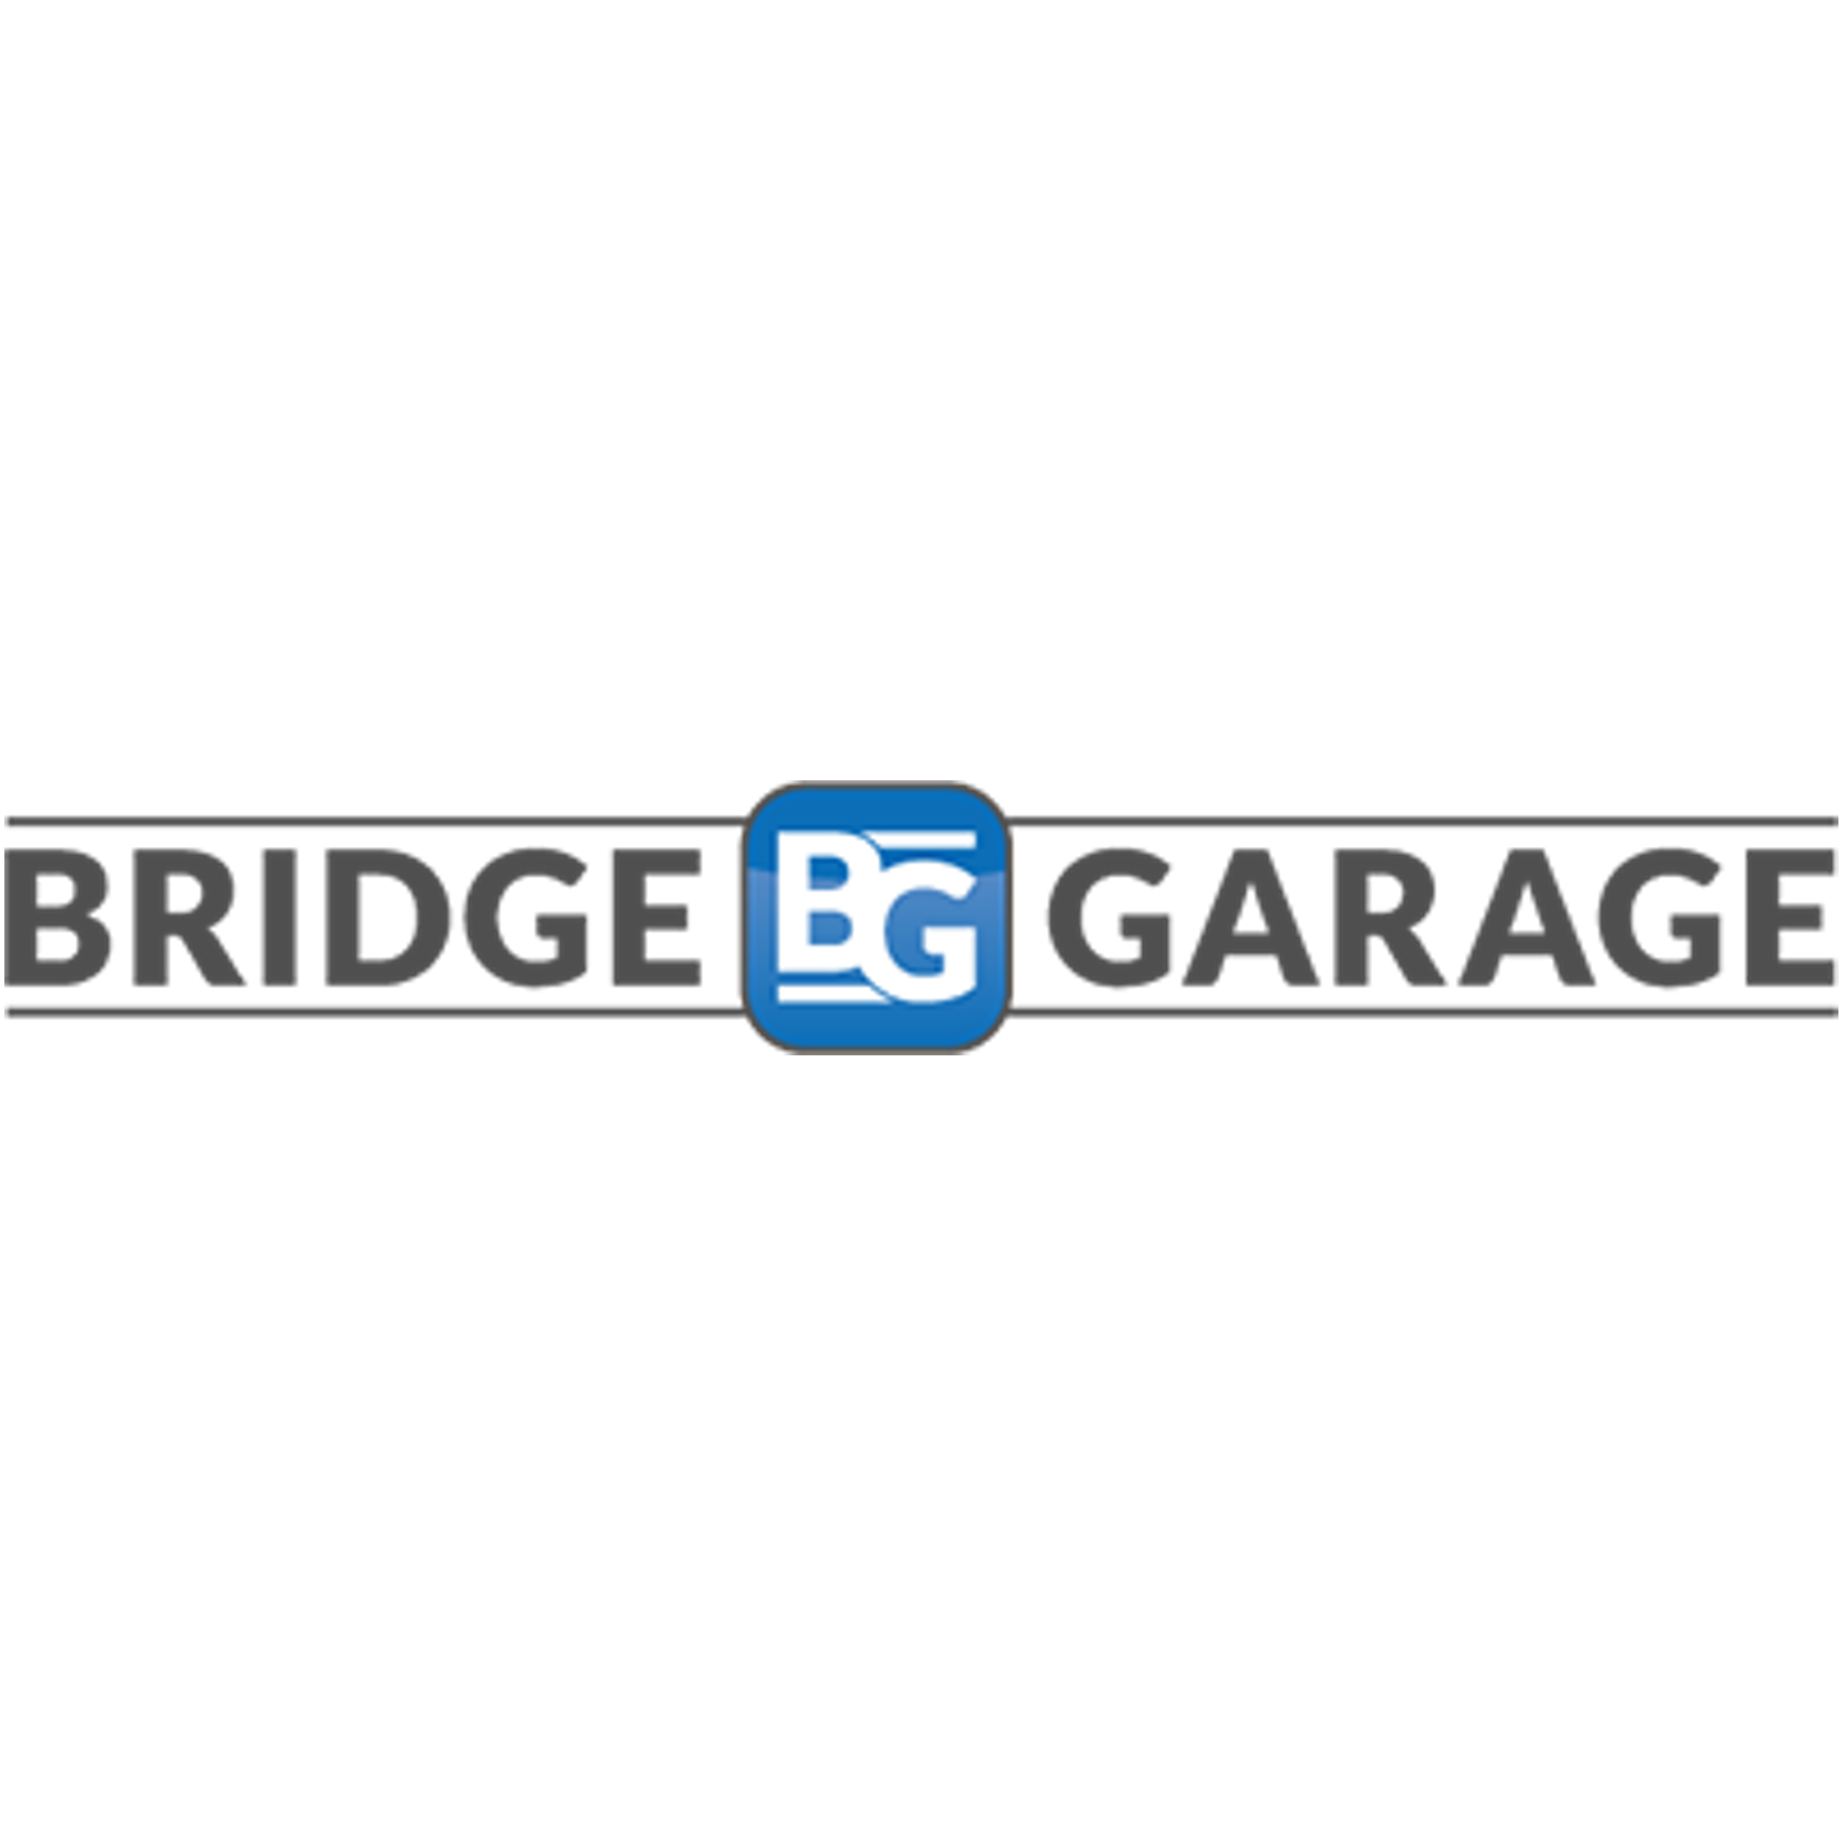 Bridge Garage Ltd